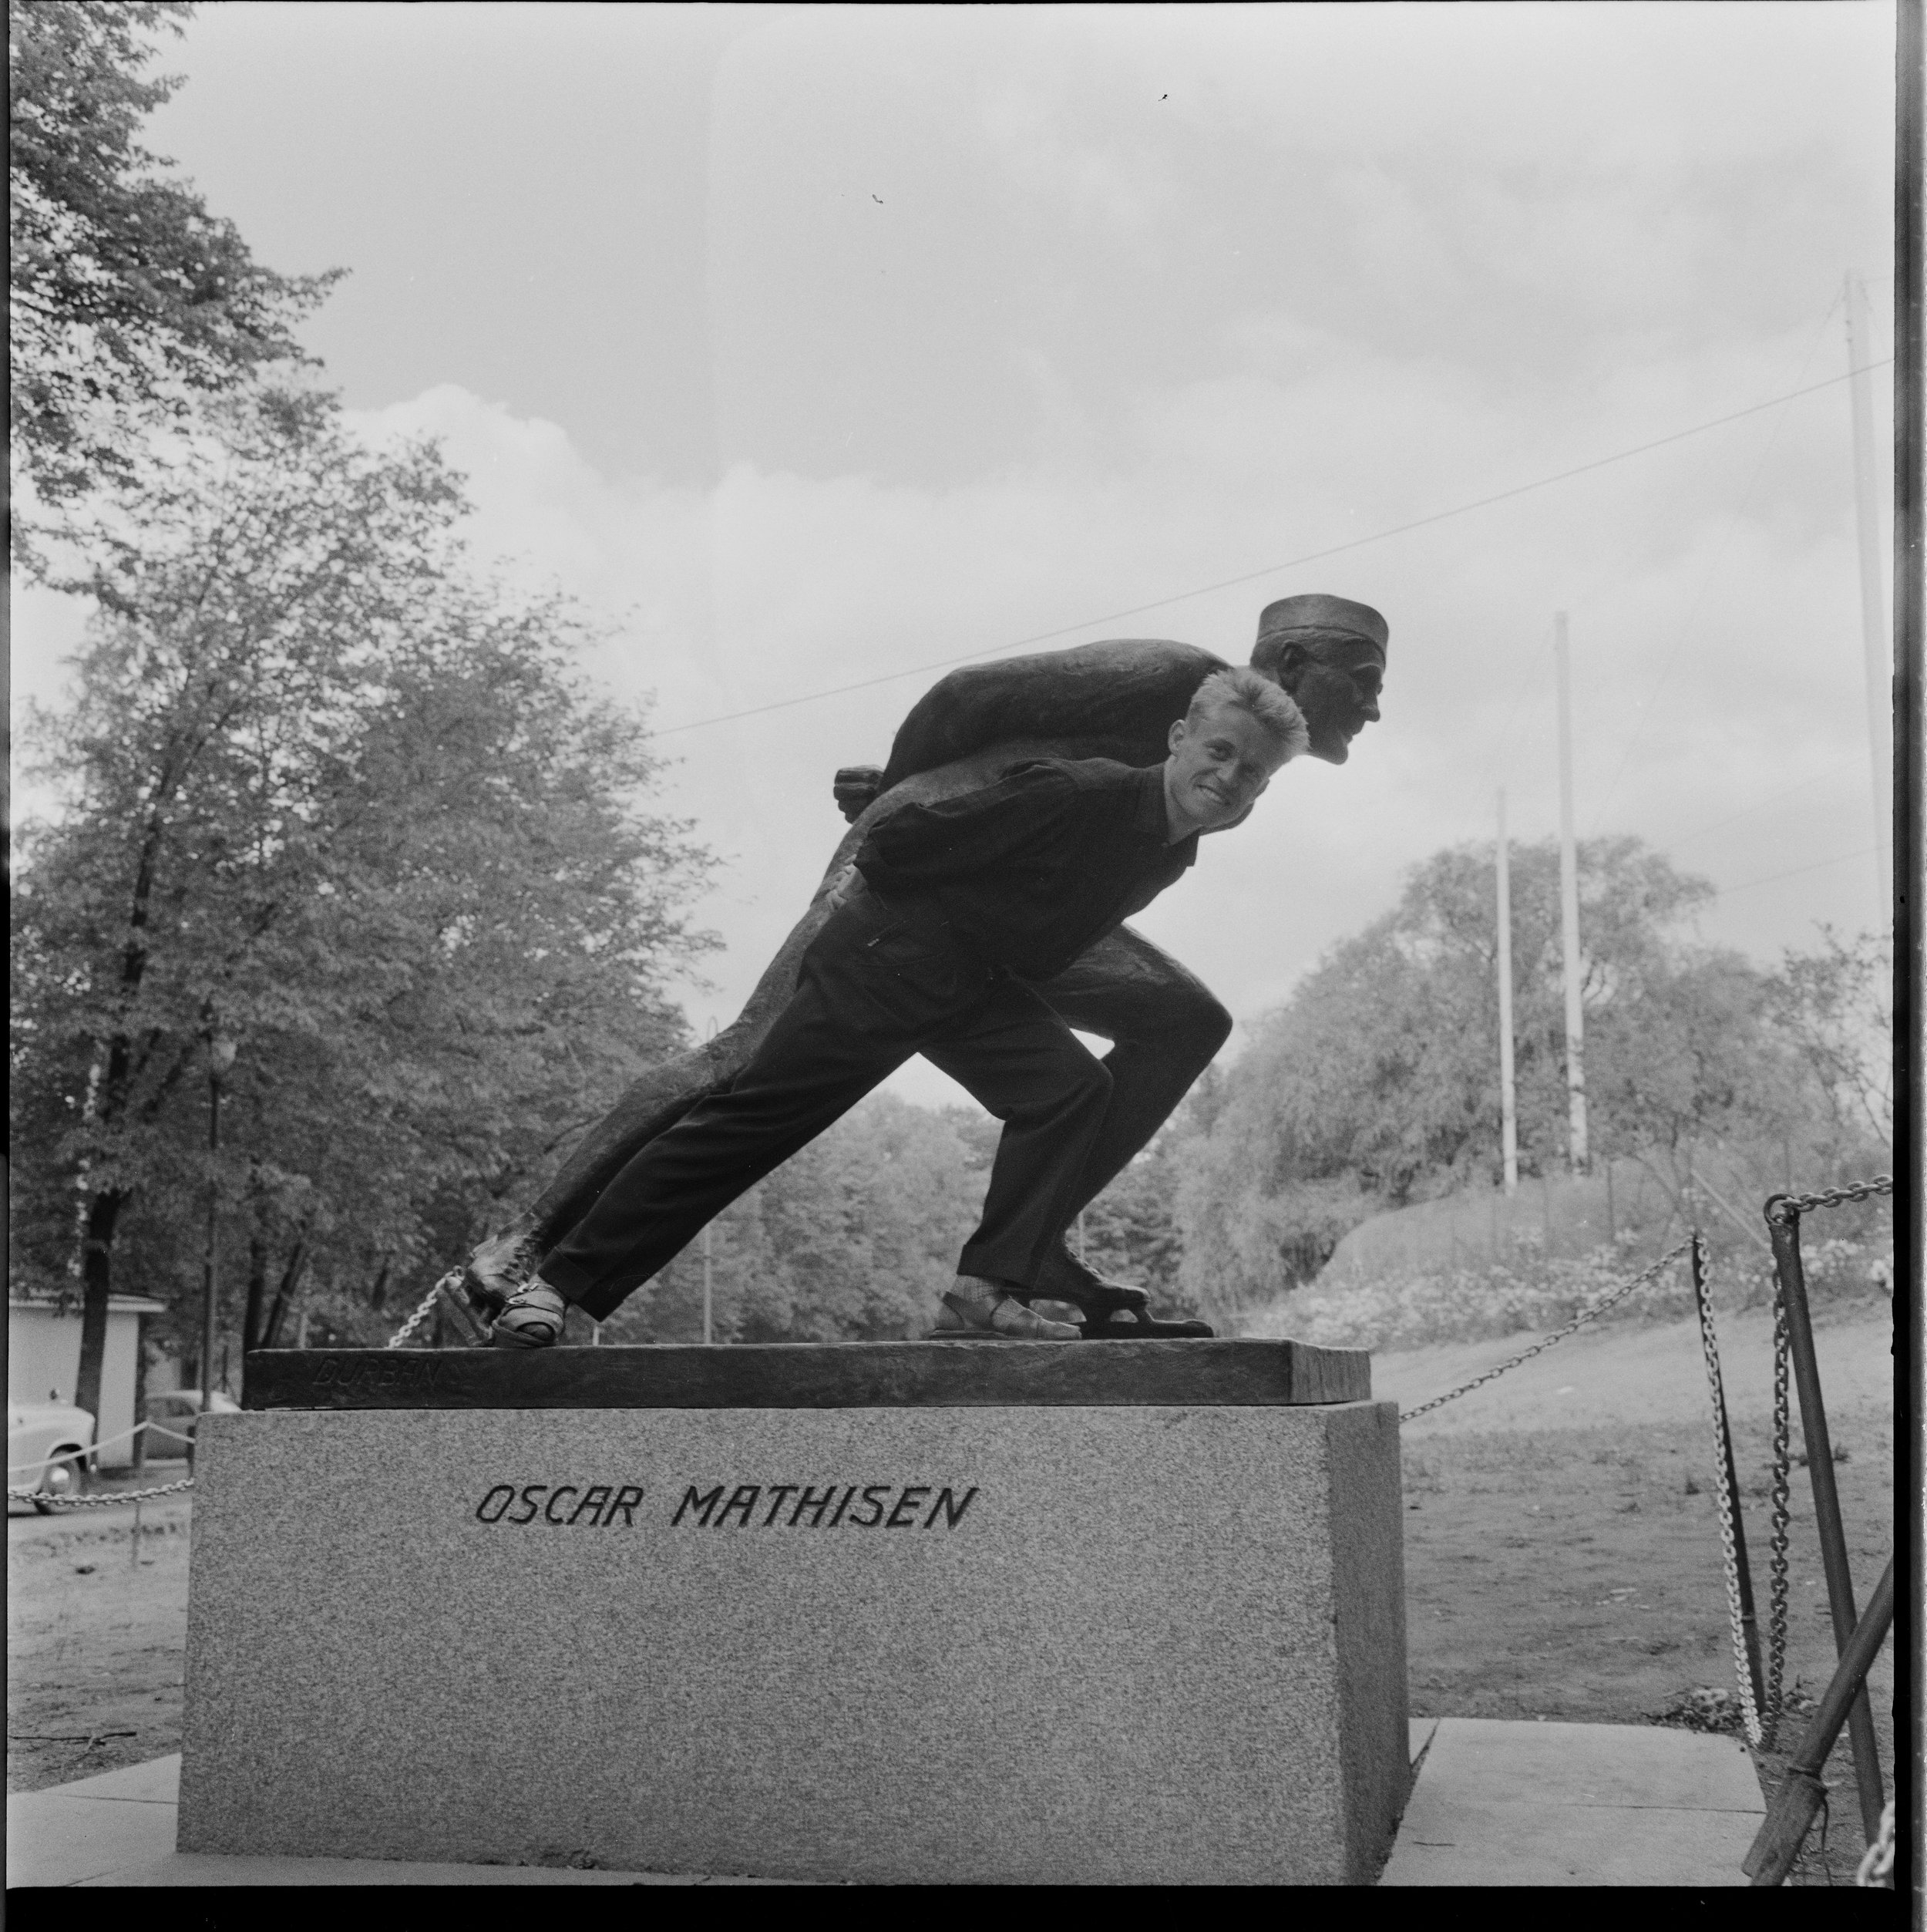 TWO SPEED SKATING KINGS: Kurt imitating the statue of speed skating king Oscar Mathisen for a report from 1959, by “Billedbladet Nå”